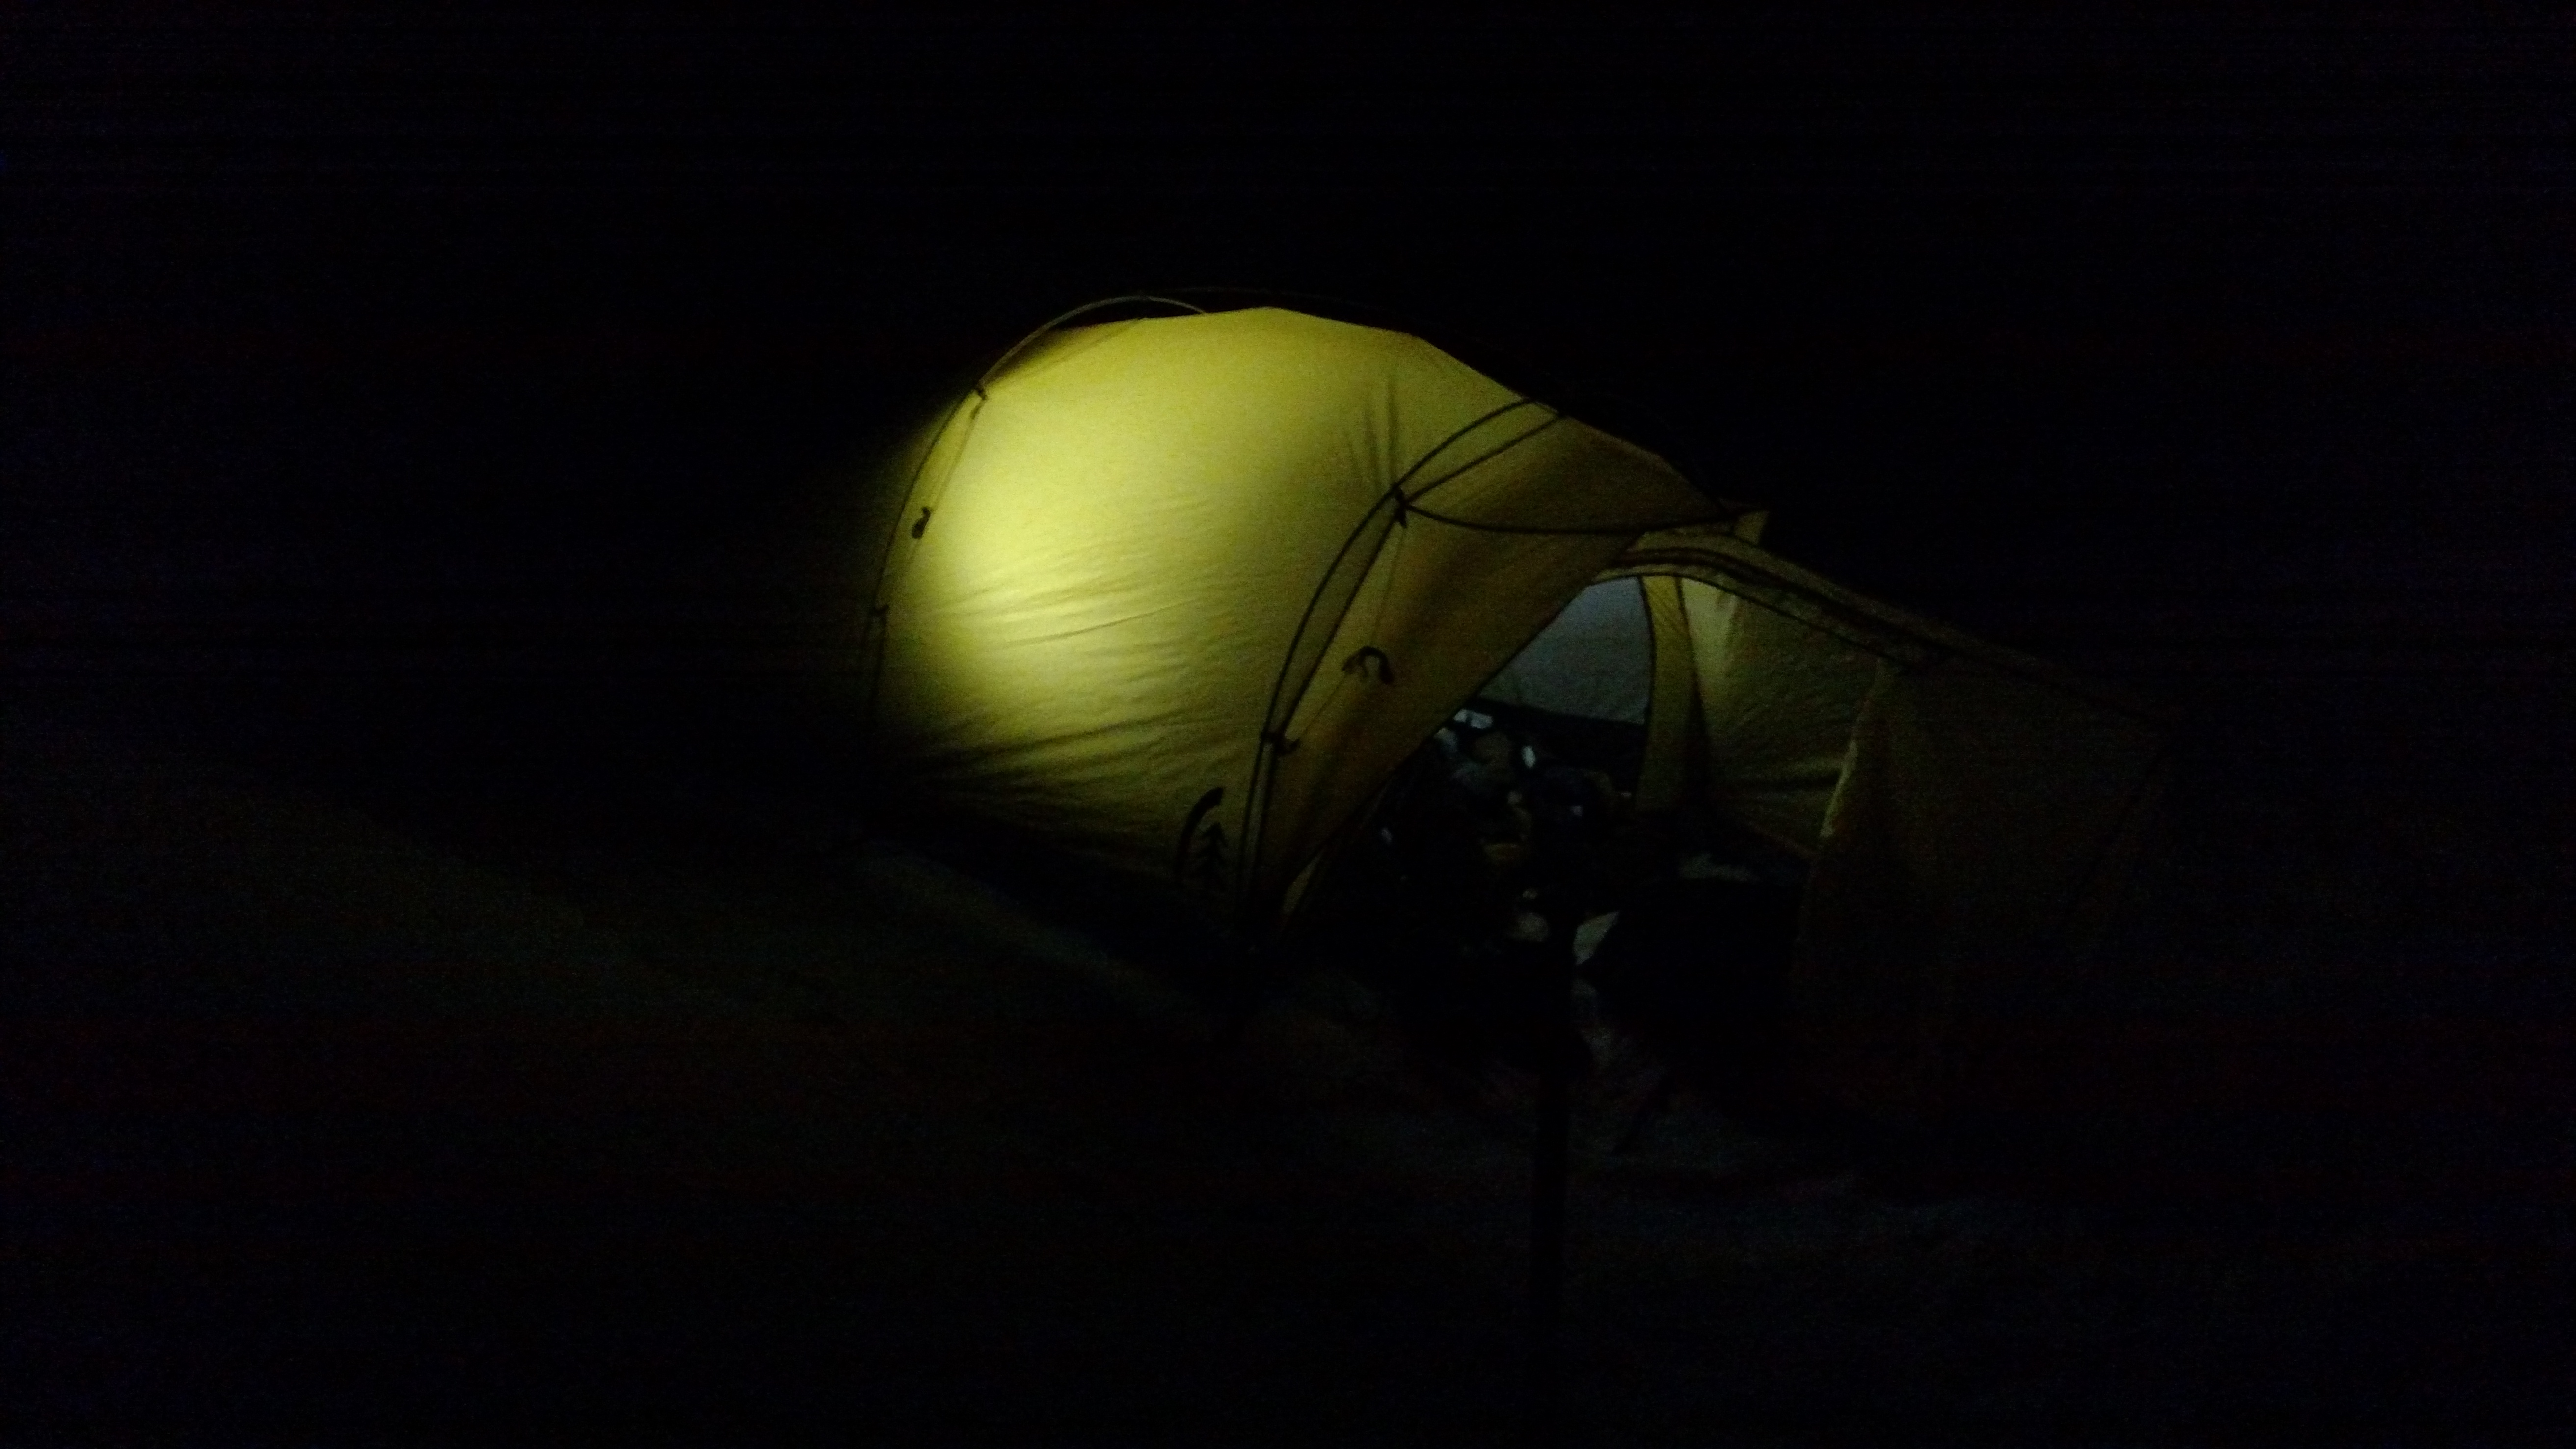 The Yellow Slug- Sierra Designs Convert 2 Winter Tent